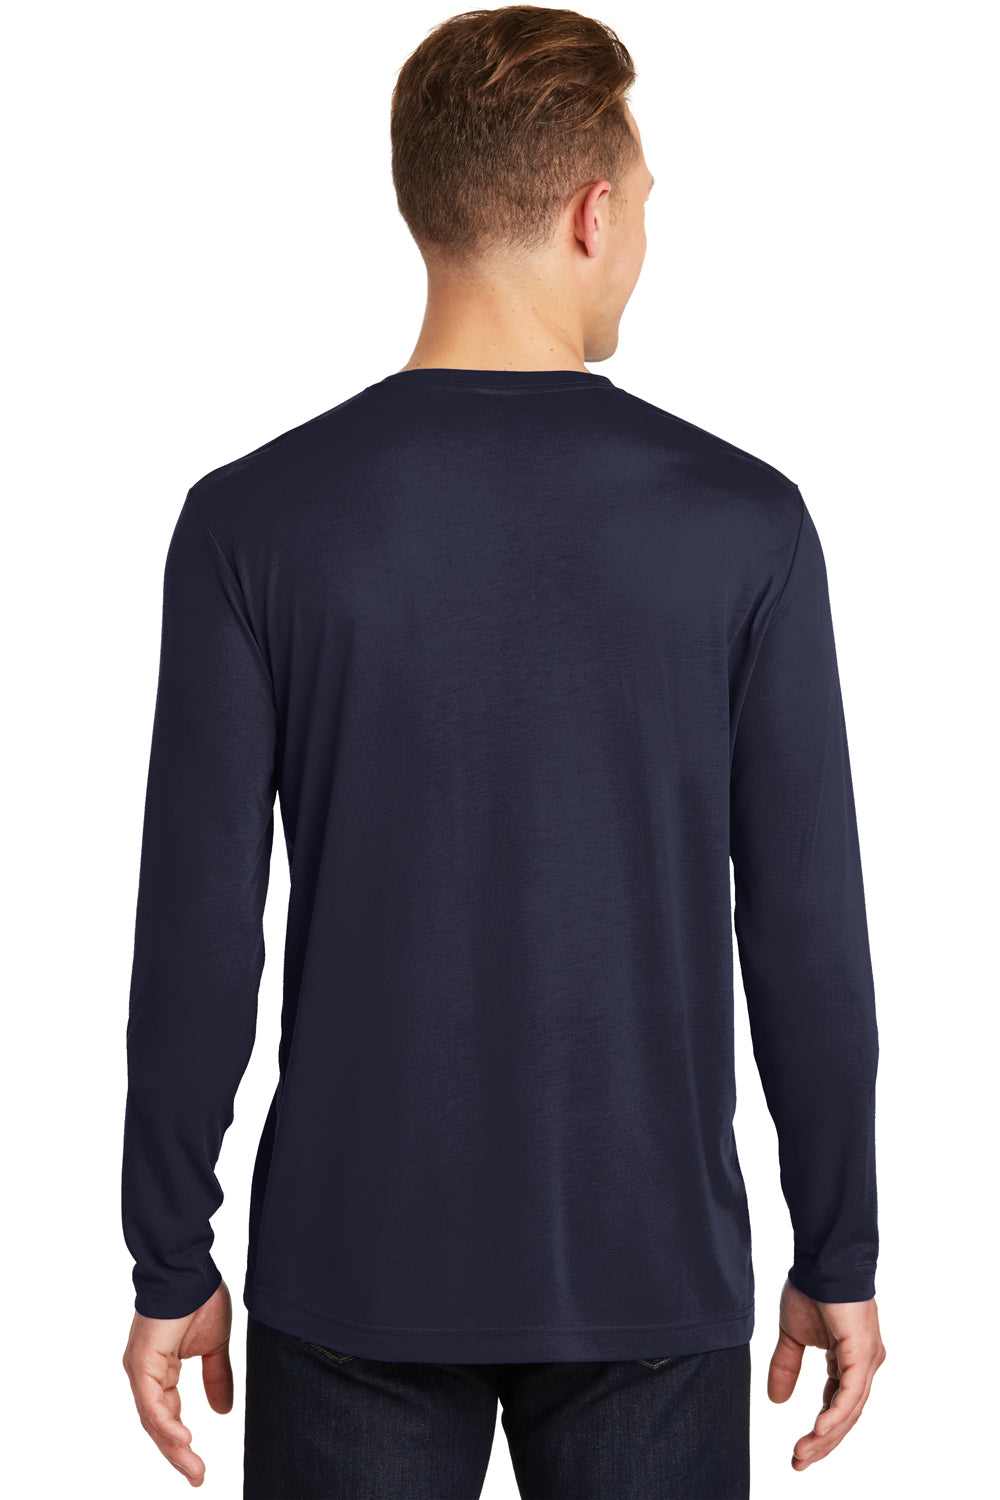 Sport-Tek ST450LS Mens Competitor Moisture Wicking Long Sleeve Crewneck T-Shirt Navy Blue Back